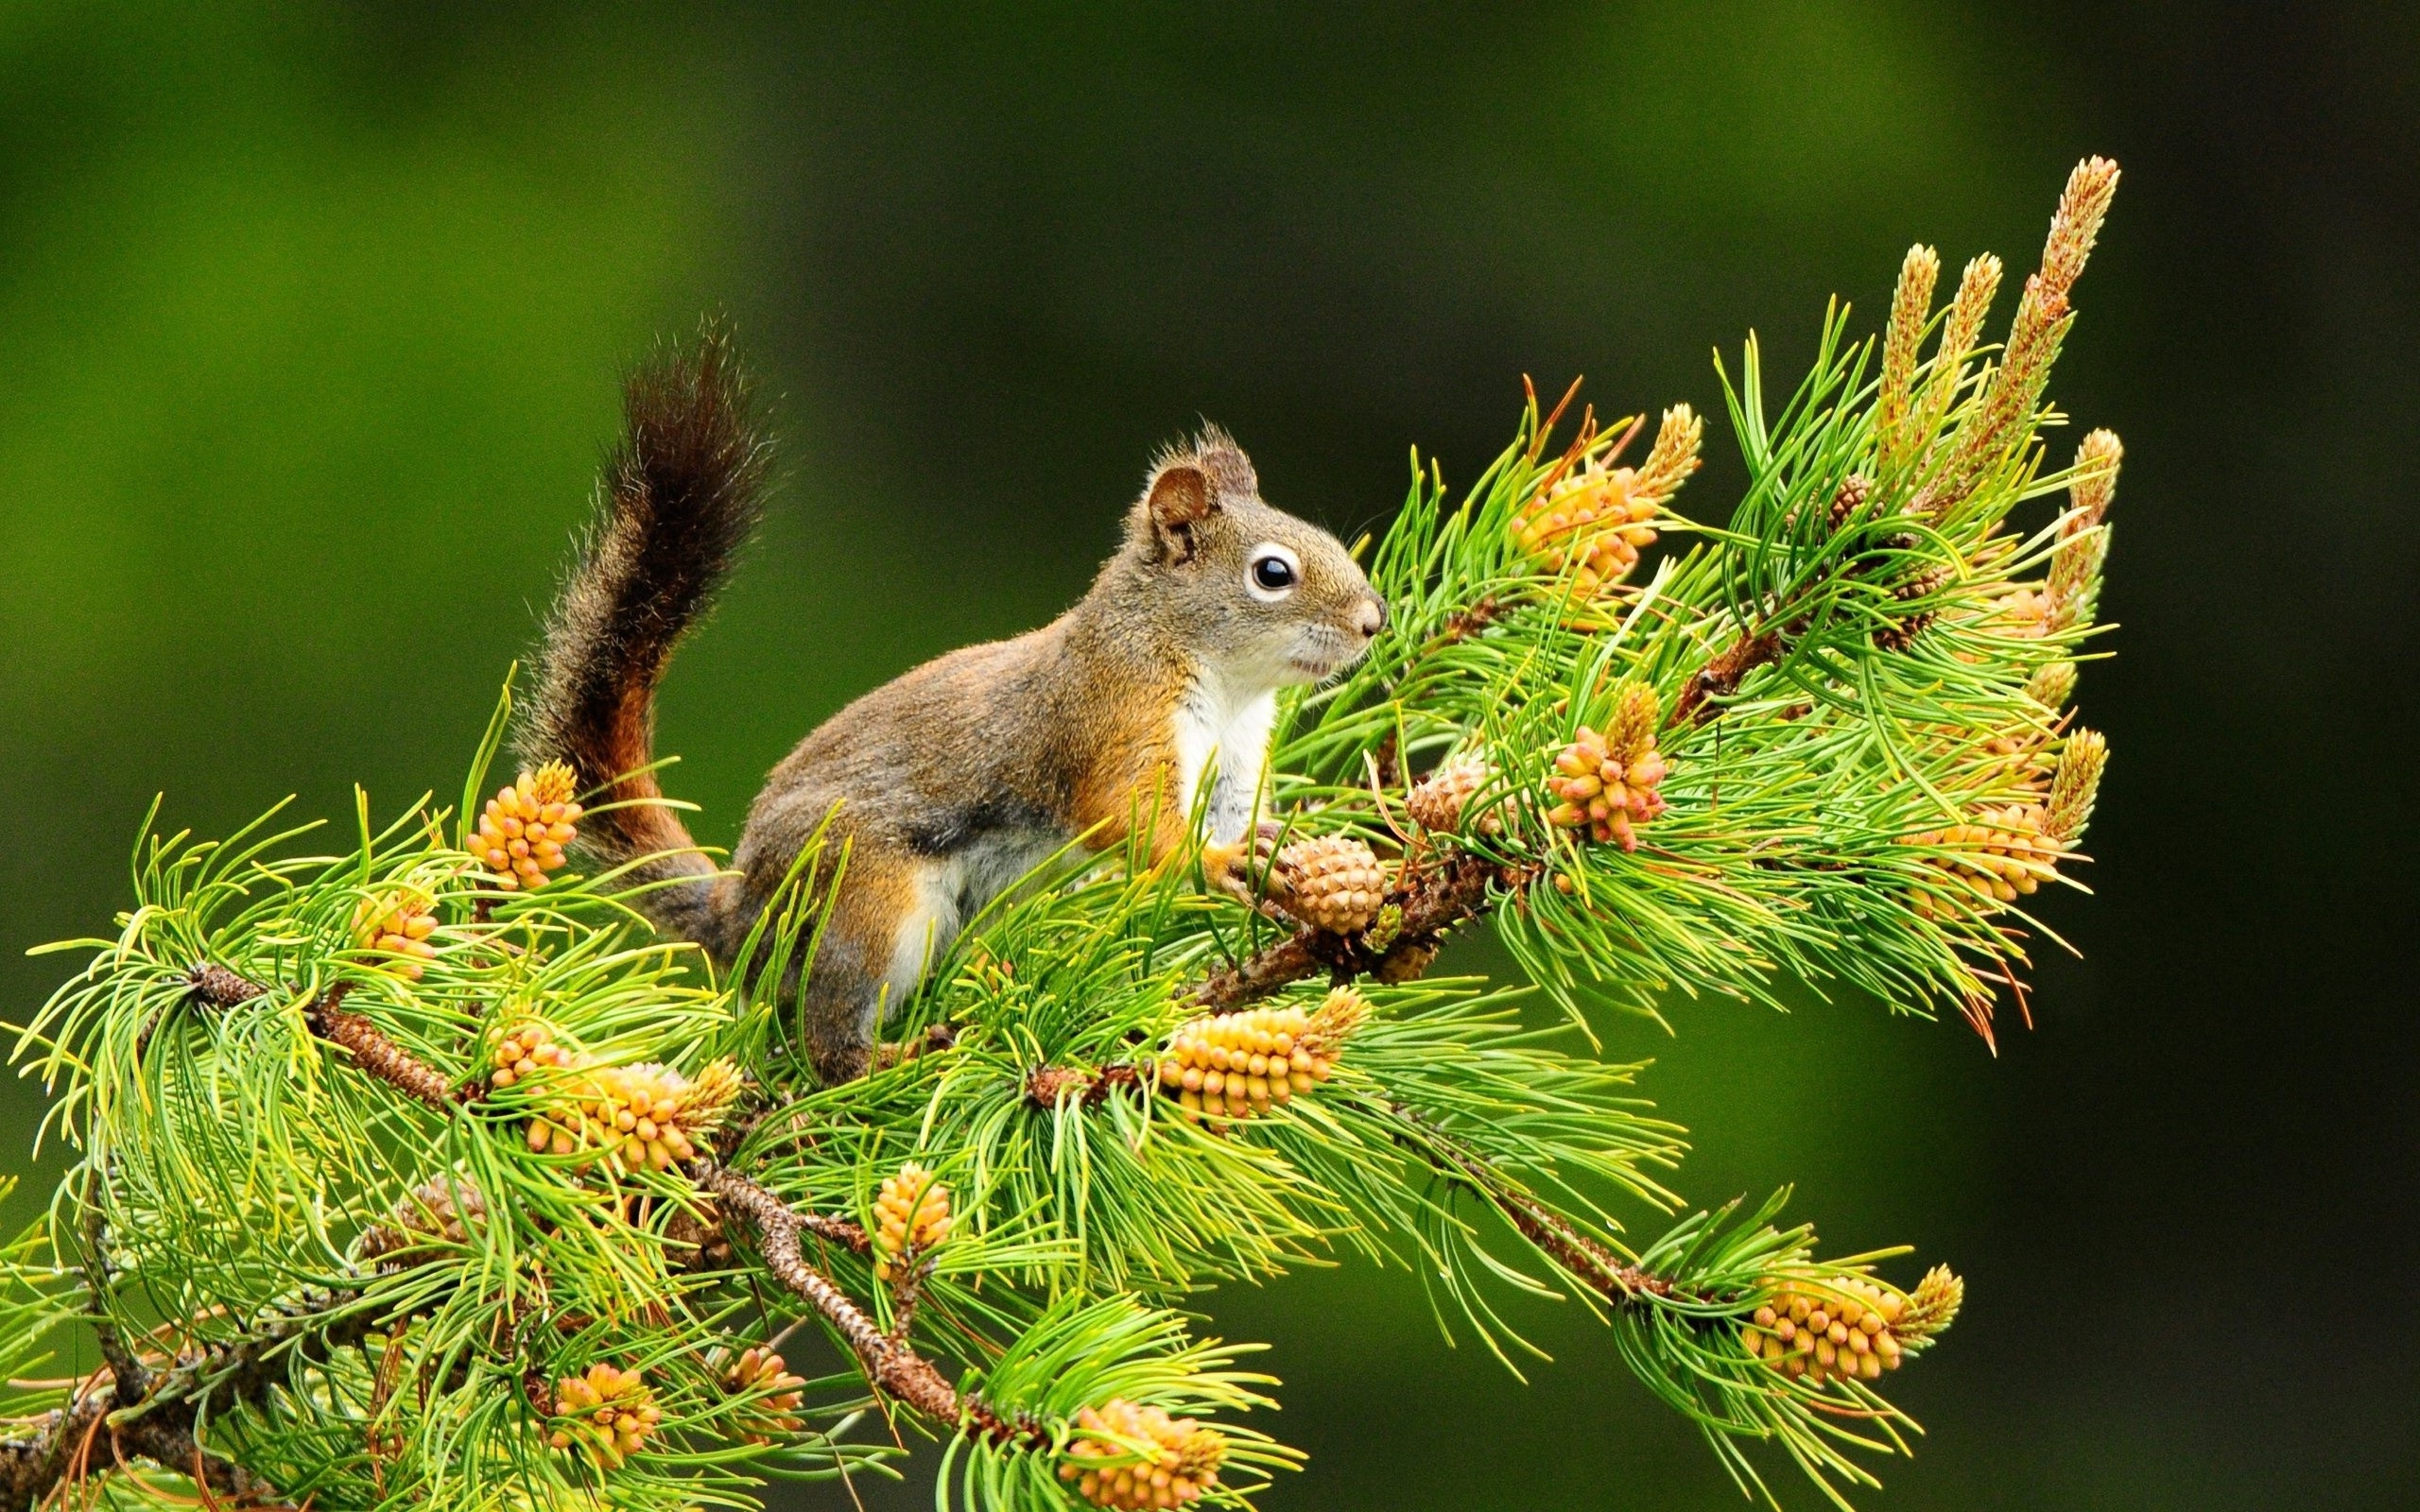 Squirrels in the pine depth field Wallpaper